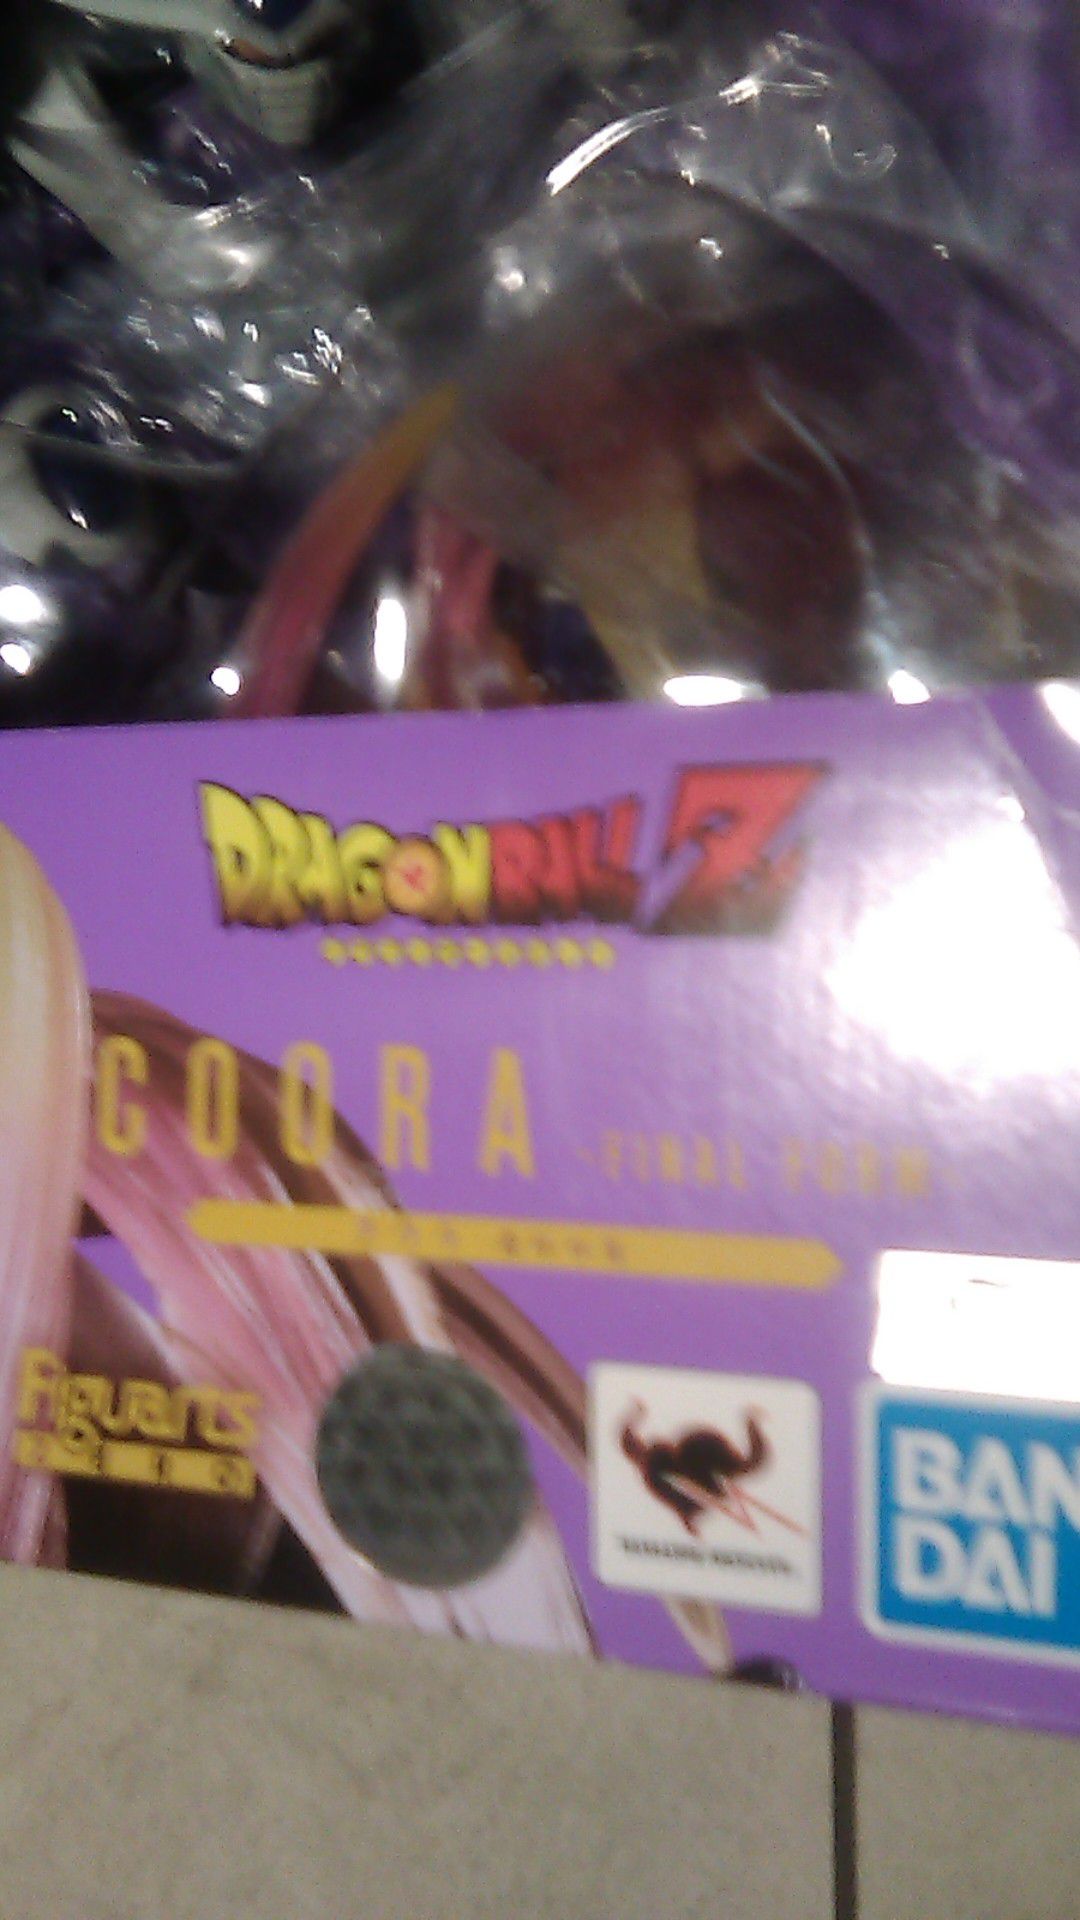 Dragon Ball Z "COBRA- FINAL FORM" Figurine brand new!! Original packaging still in-tact NEVER BEEN OPENED!!!!